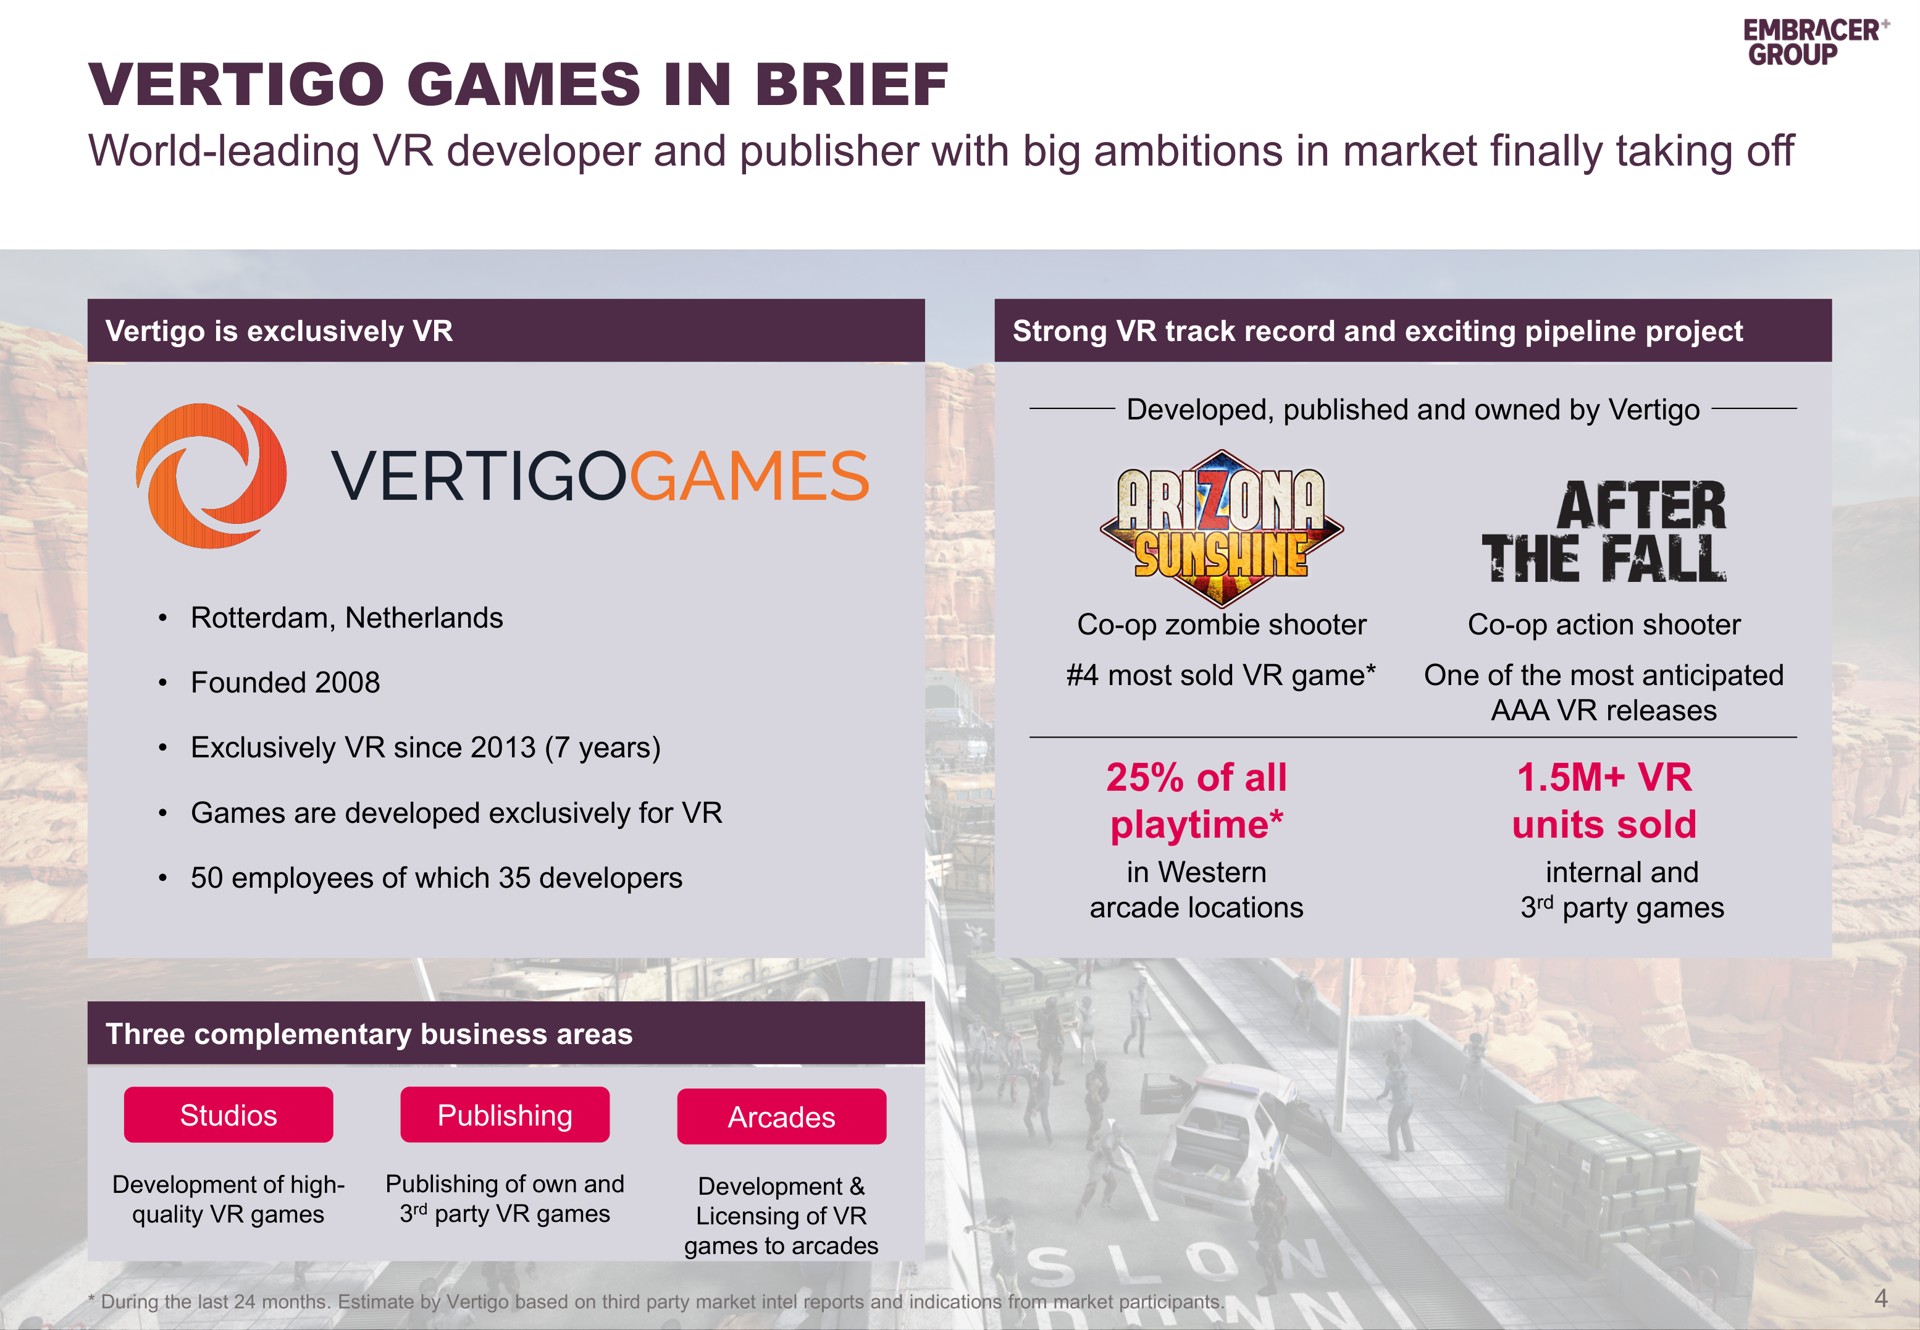 vertigo games in brief the fall | Embracer Group